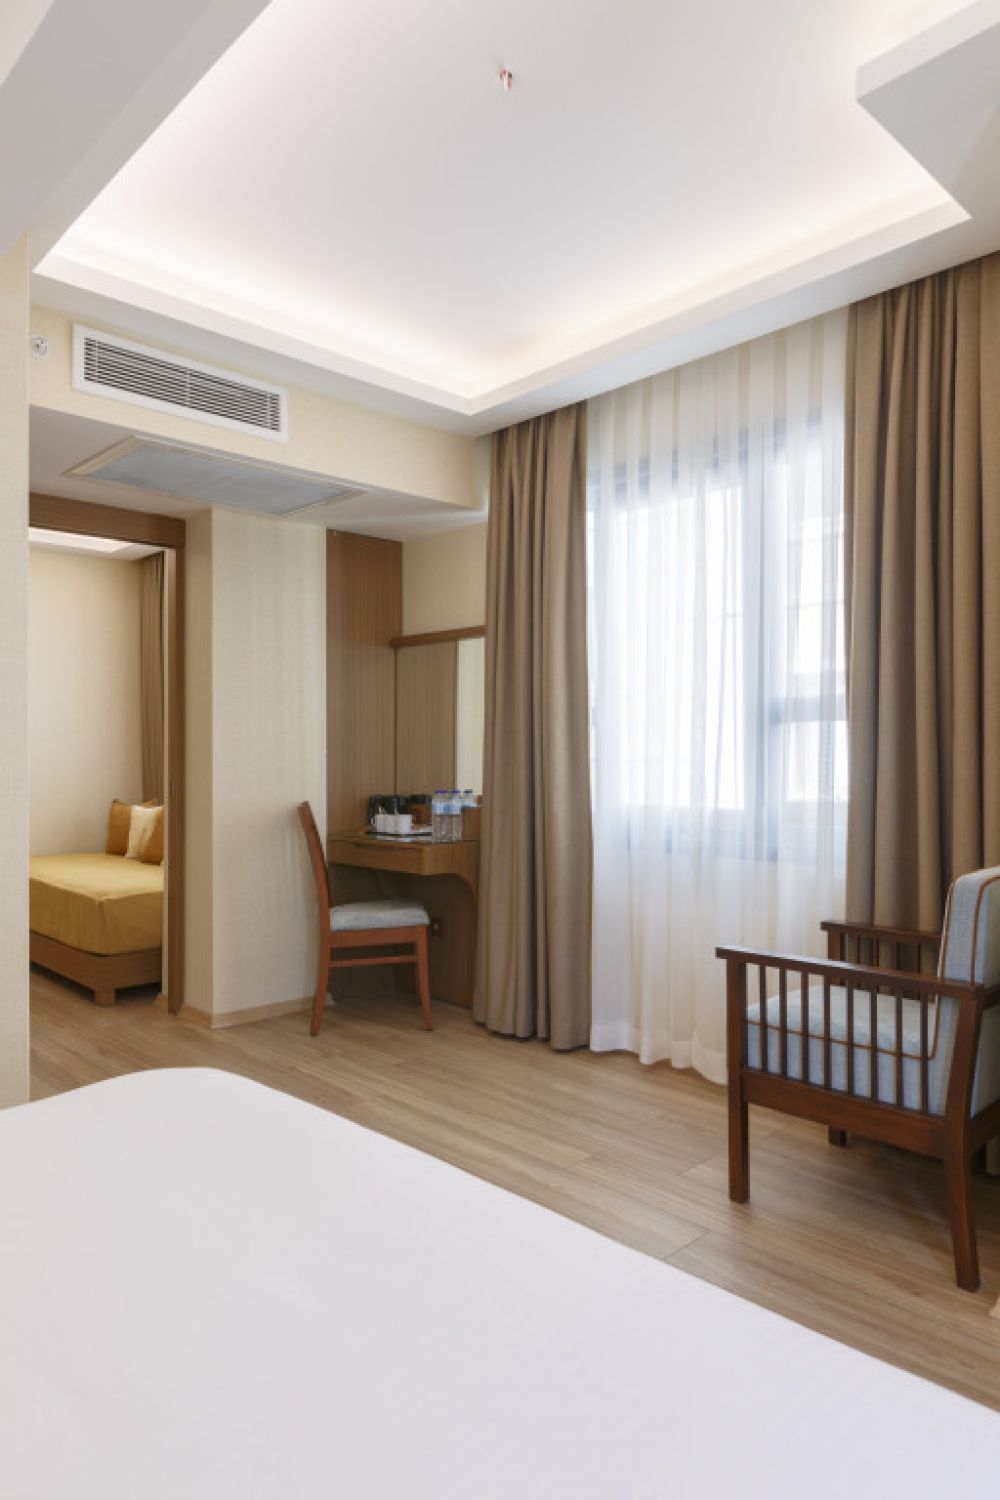 Junior Suite Room, Lalahan Hotel 4*